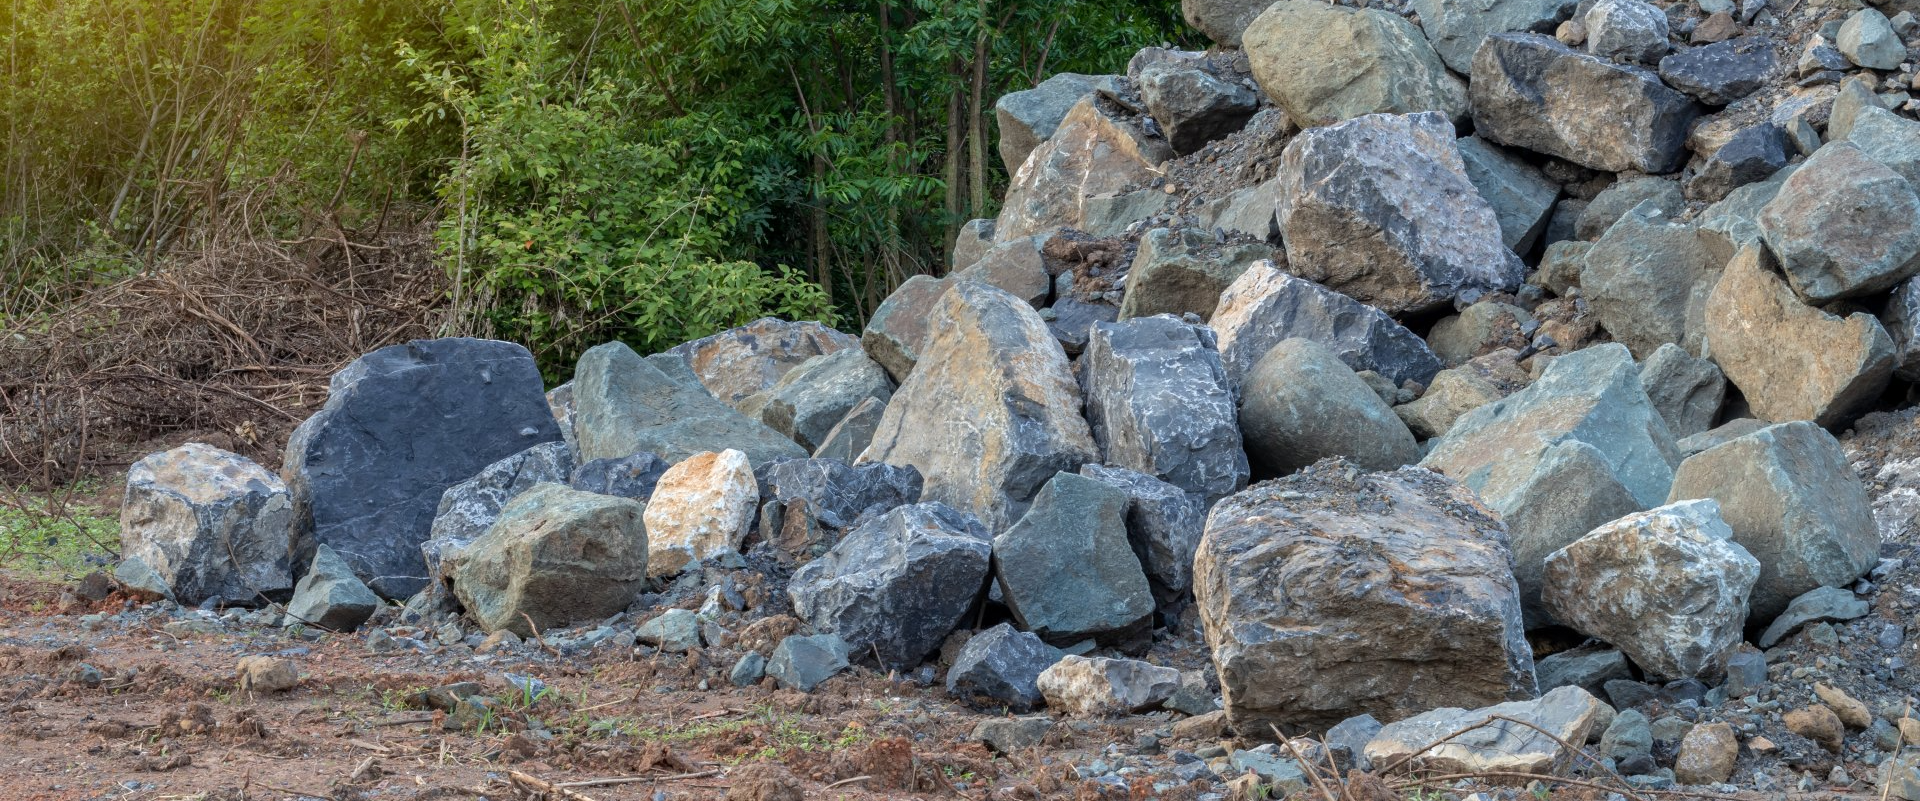 murfreesboro boulders